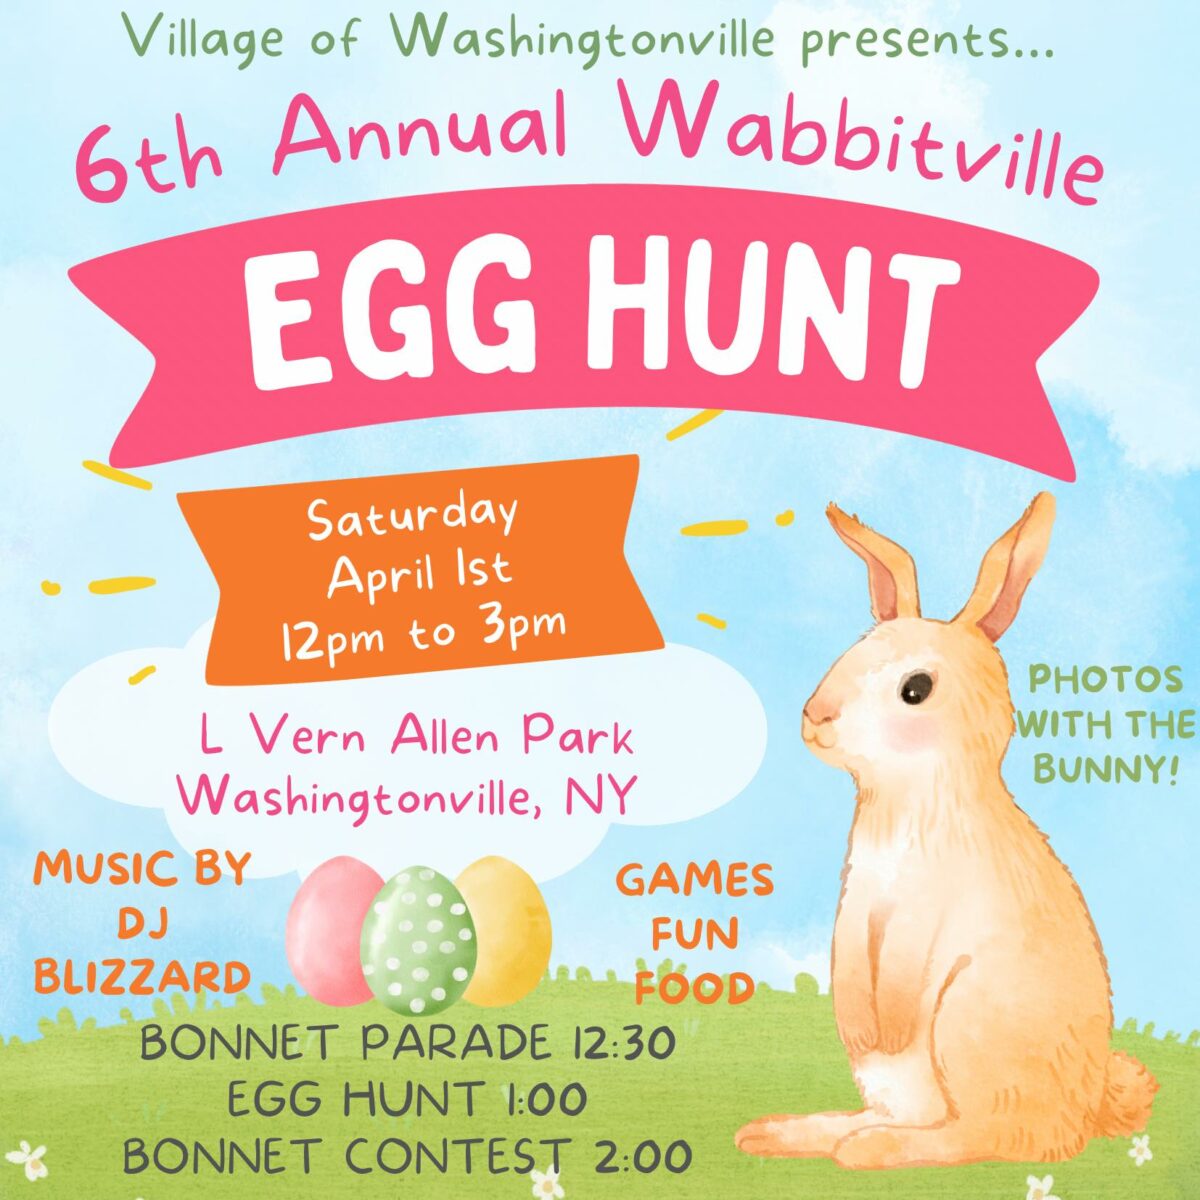 Wabbitville Egg Hunt & Bonnet Parade in Washingtonville